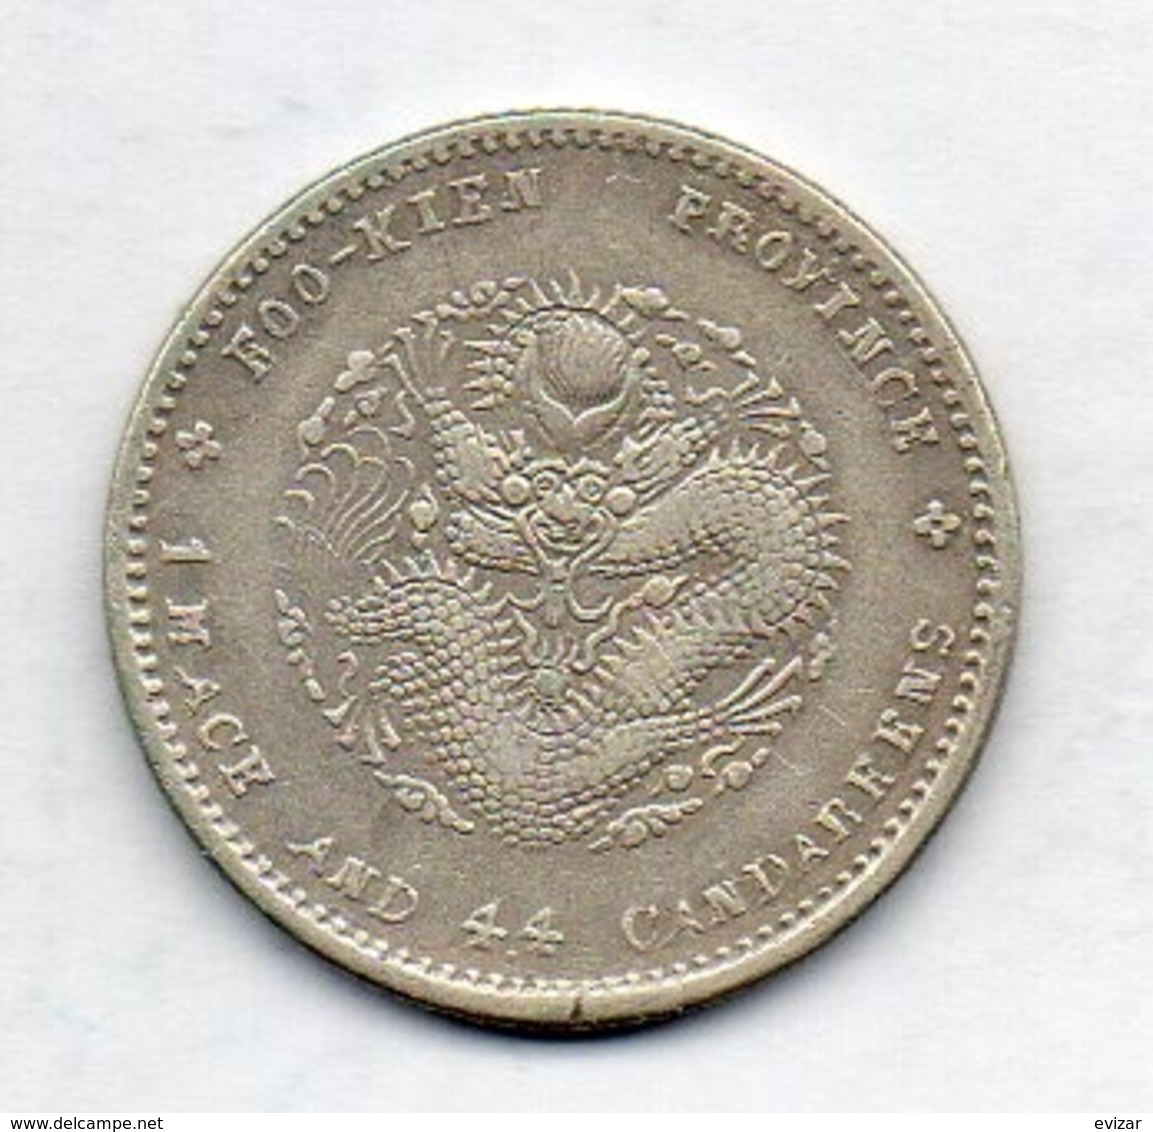 CHINA - FUKIEN PROVINCE, 20 Cents, Silver, Year 1903-08, KM #104.2 - China